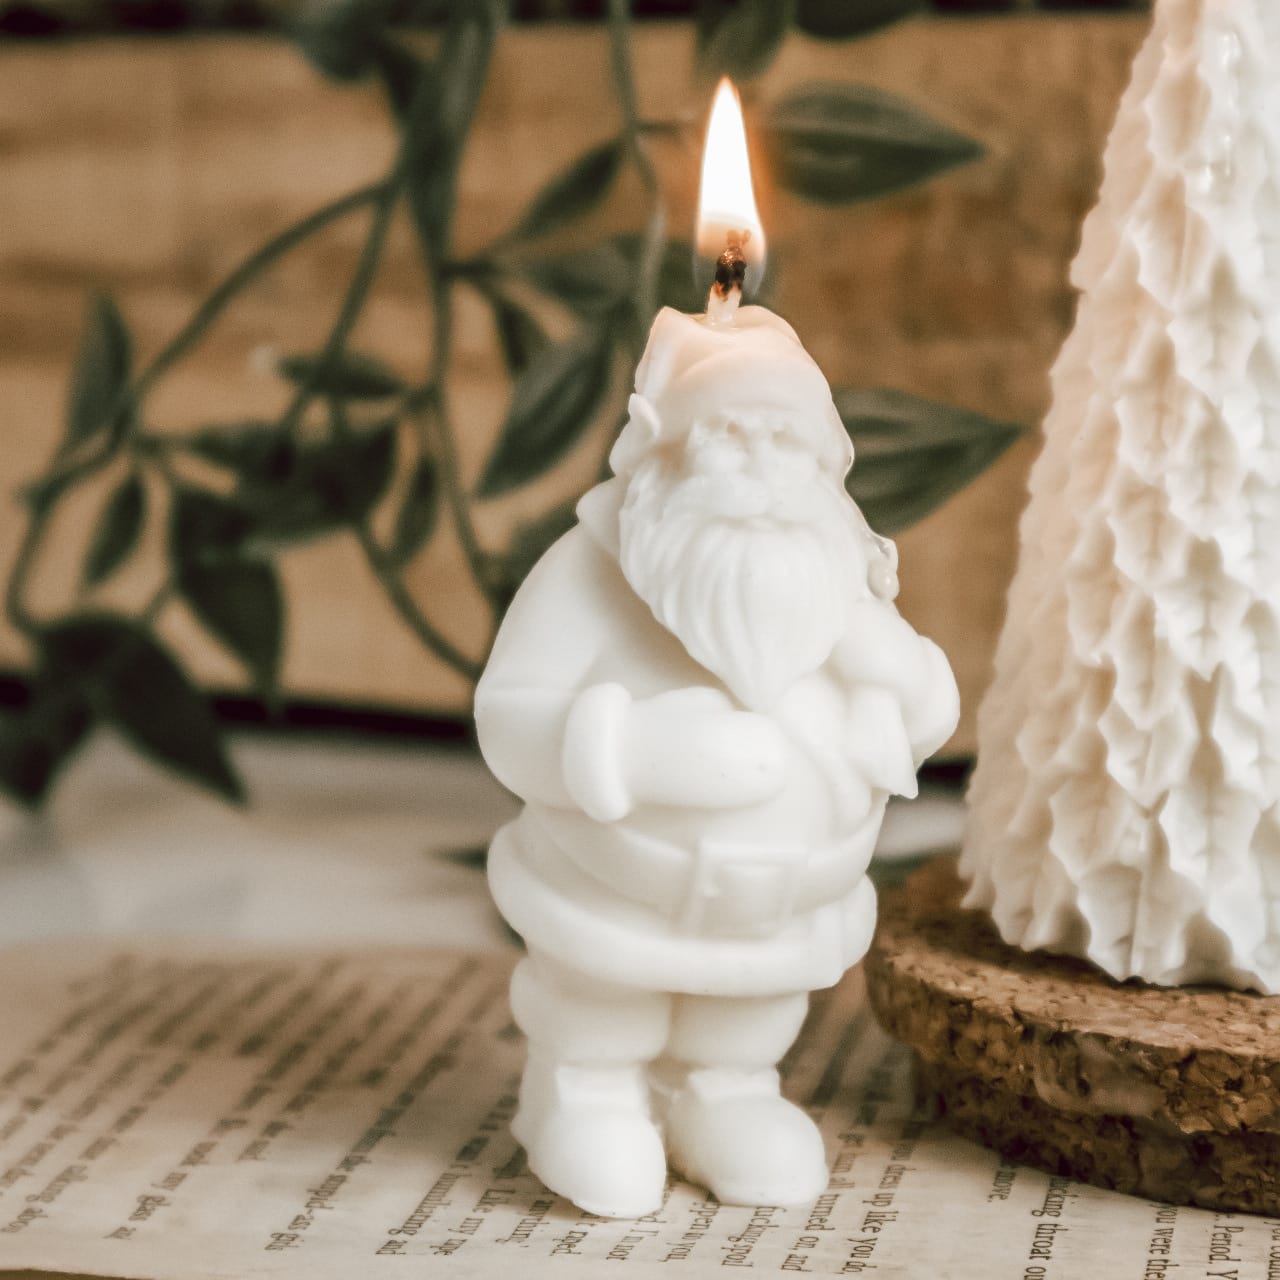 Santa & Christmas tree candle